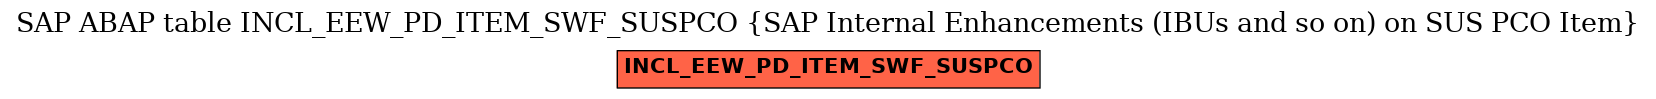 E-R Diagram for table INCL_EEW_PD_ITEM_SWF_SUSPCO (SAP Internal Enhancements (IBUs and so on) on SUS PCO Item)